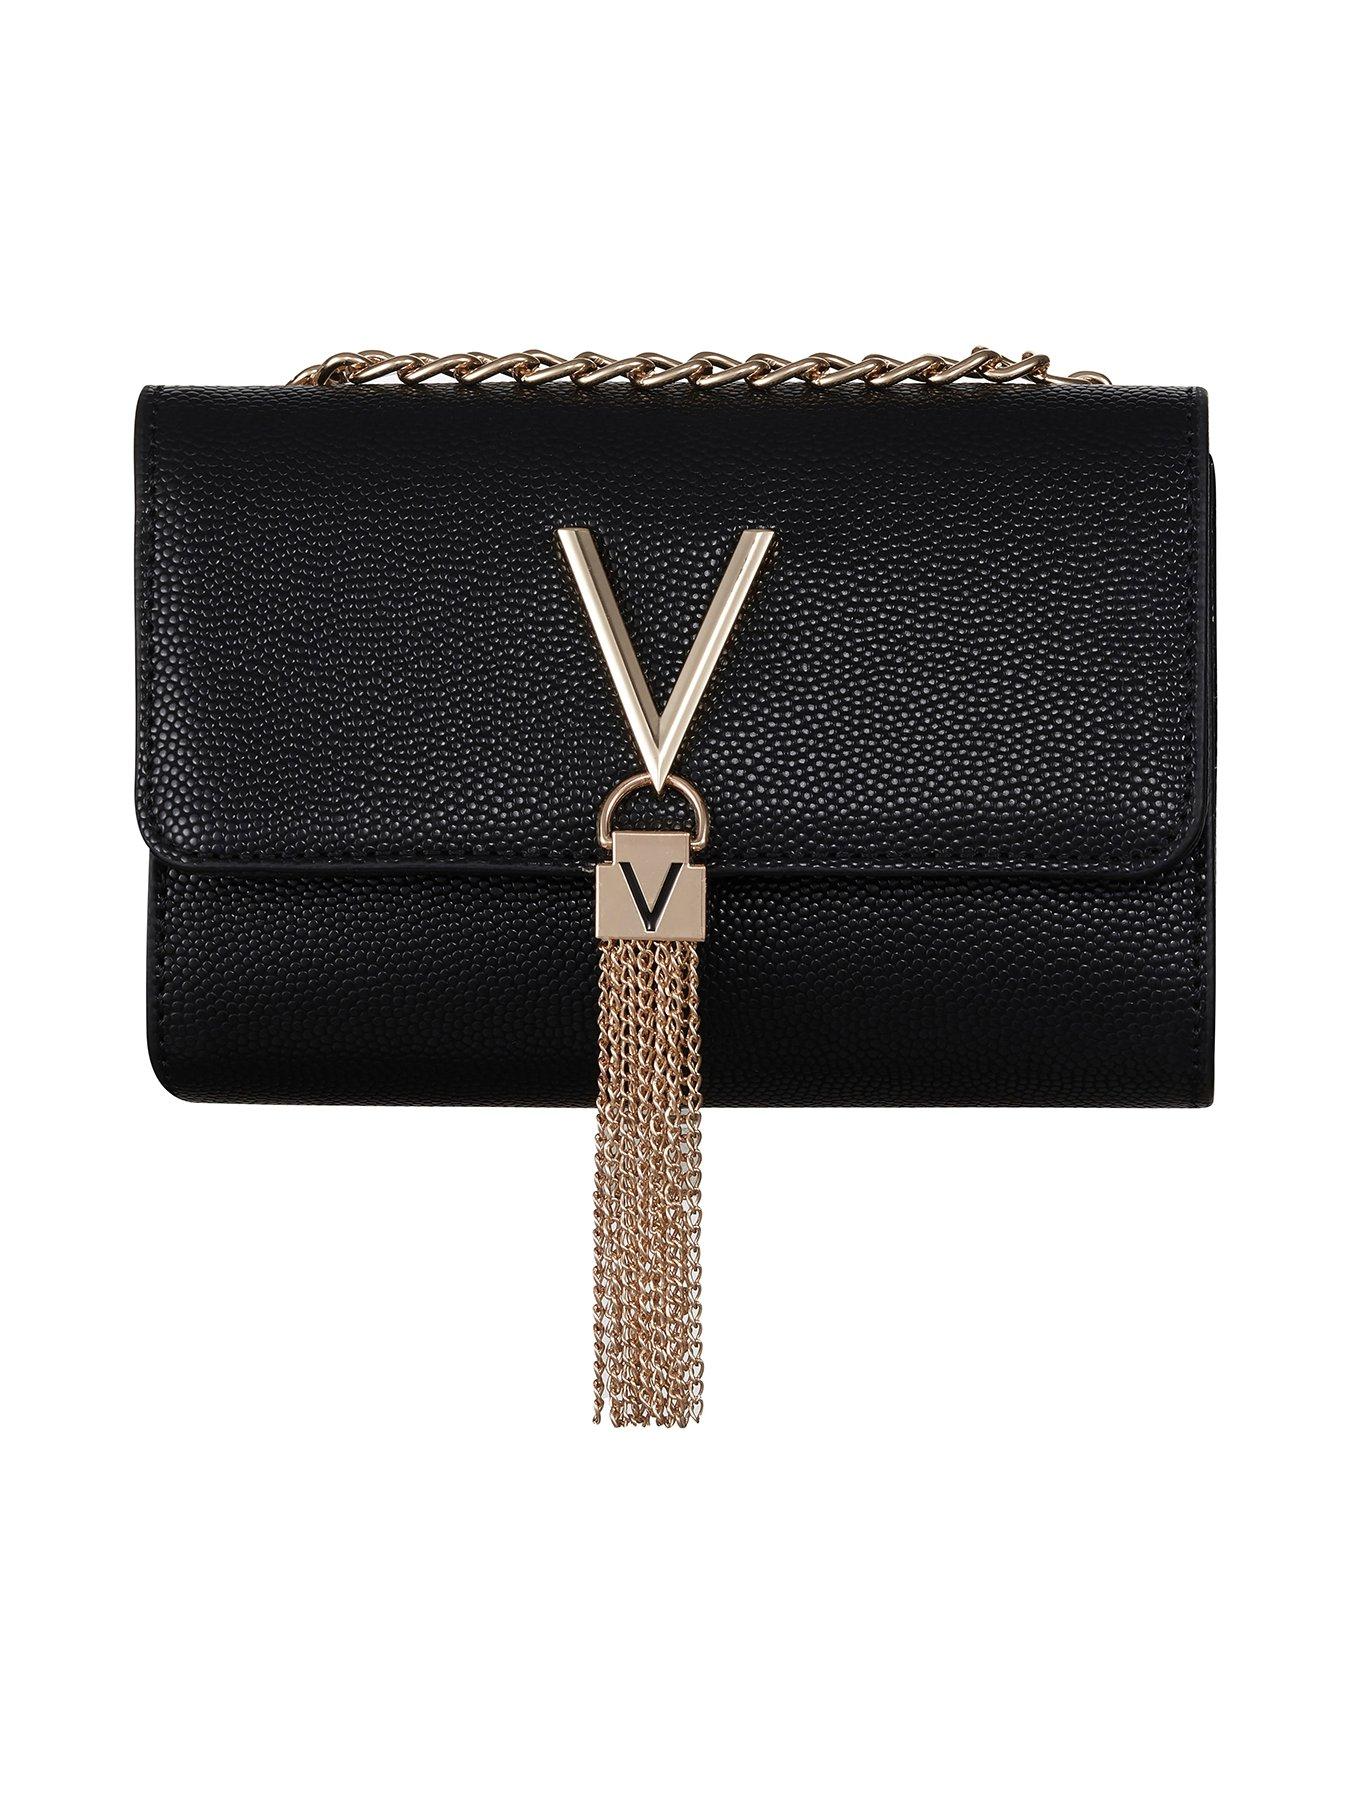 Valentino Women's Divina Small Shoulder Bag - Silver